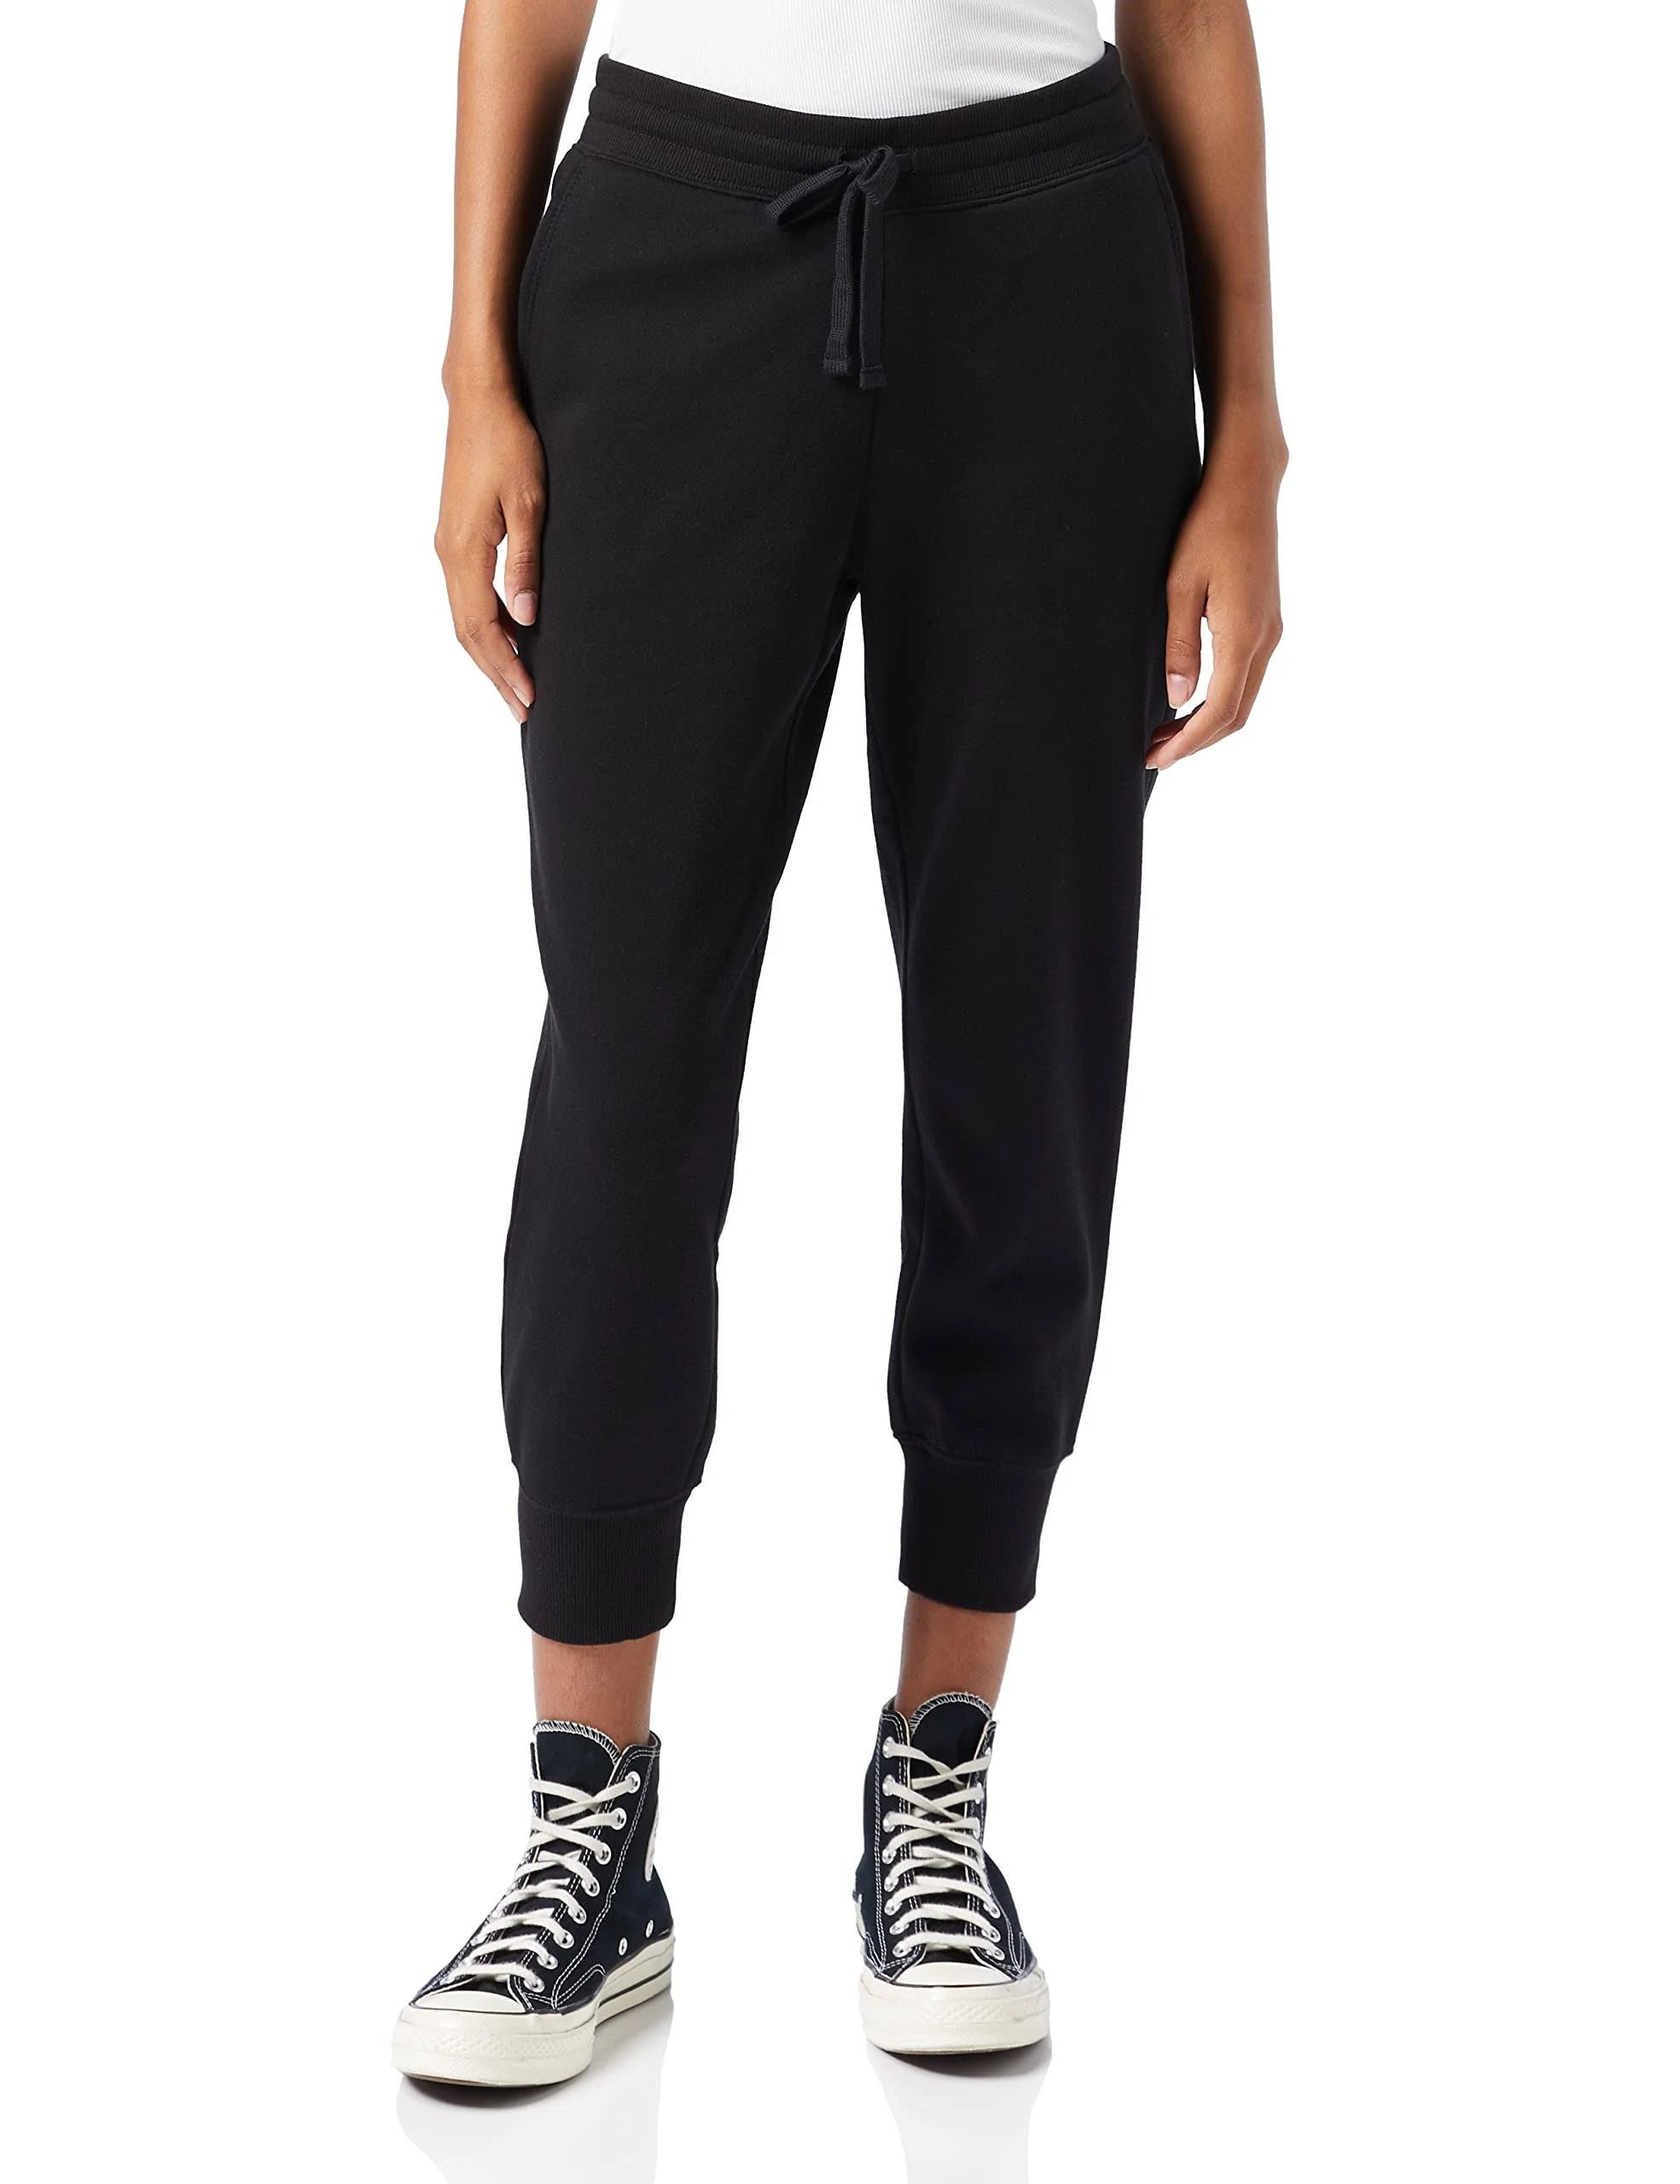 Affordable, Comfortable Black Fleece Capri Joggers for Women | Image